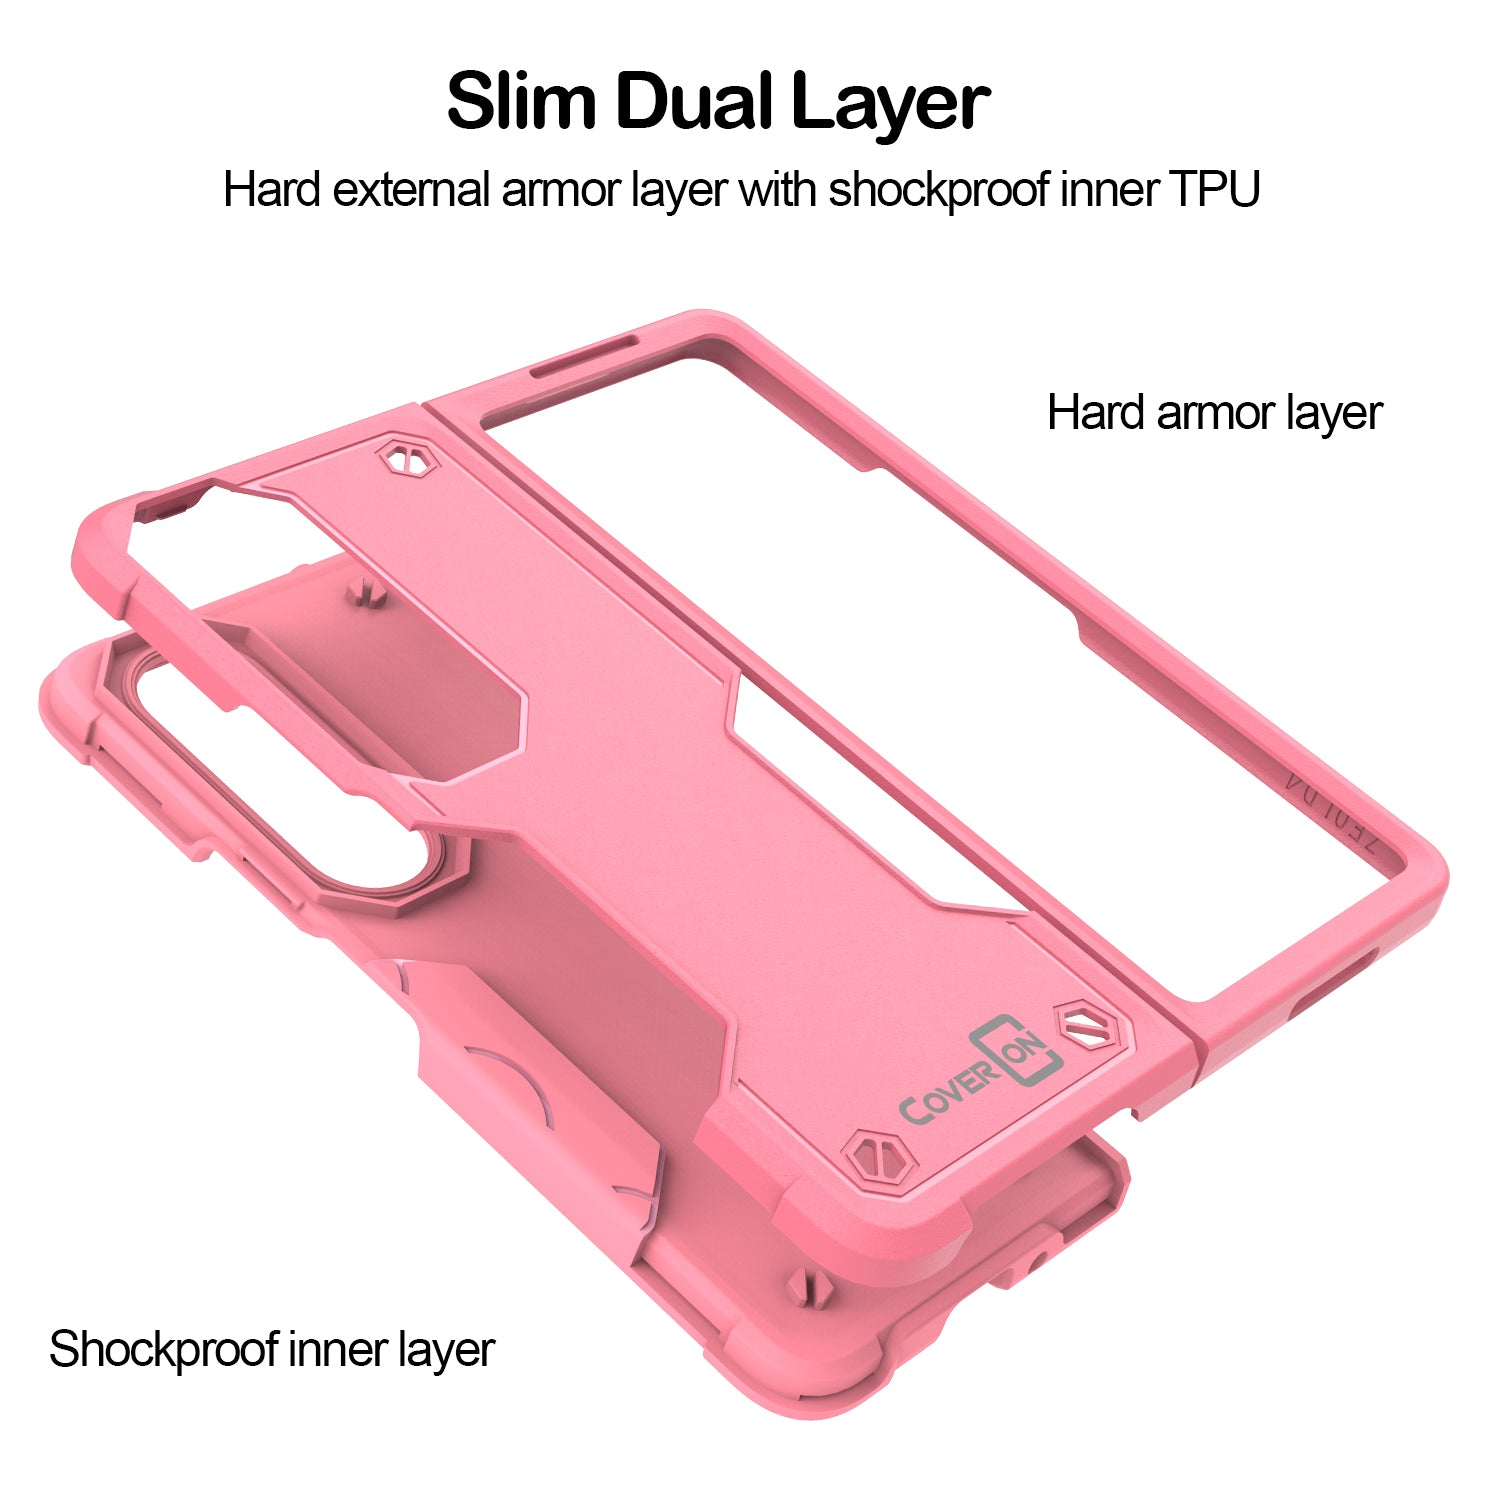 Samsung Galaxy Z Fold4 Case Heavy Duty Military Grade Phone Cover